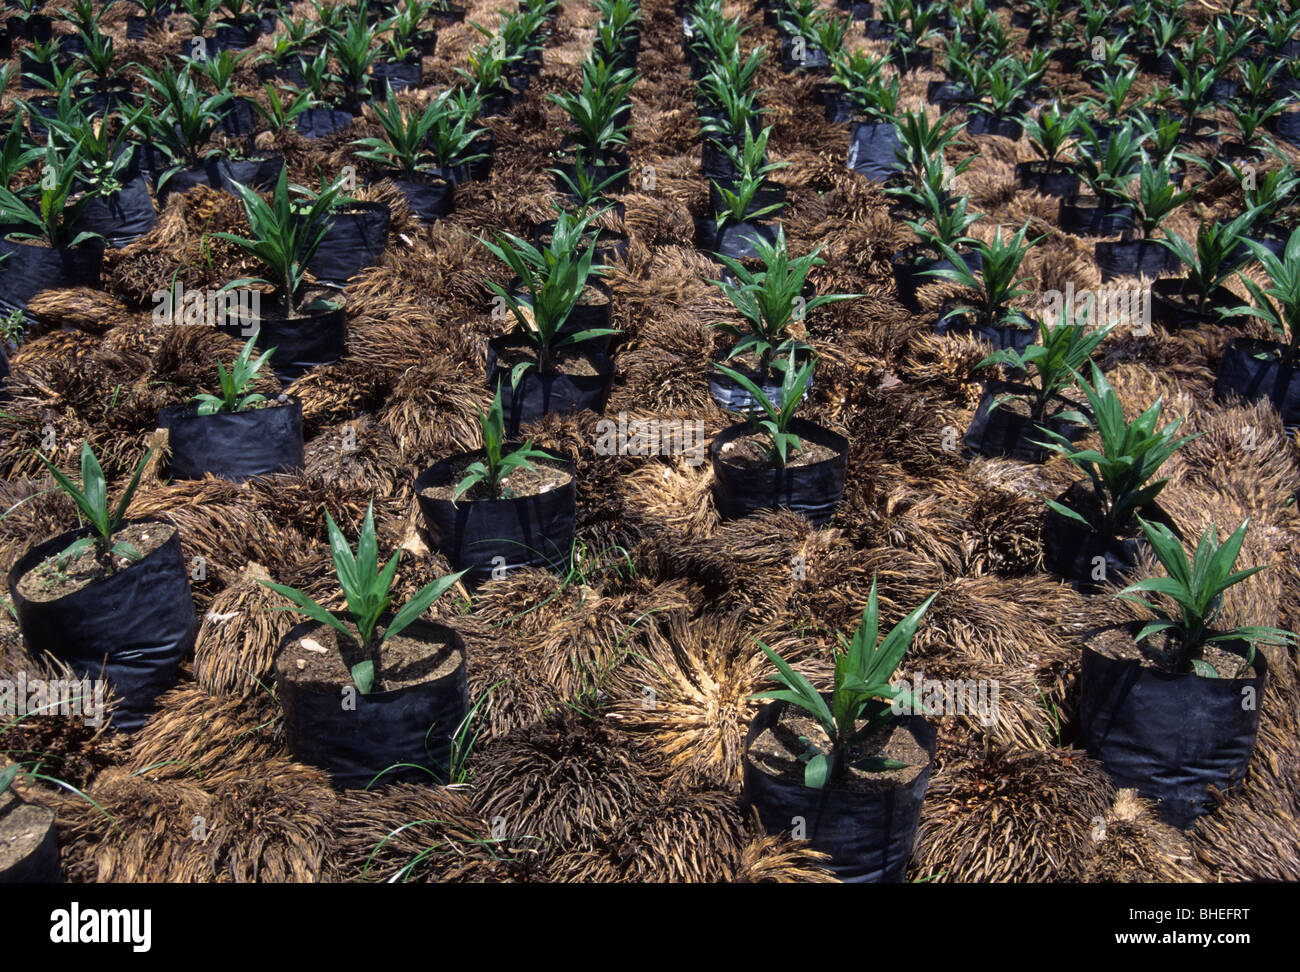 Near Abidjan, Cote d'Ivoire, Ivory Coast, West Africa. Palm Oil Plantation. Palm Oil Seedlings Awaiting Transplanting. Stock Photo